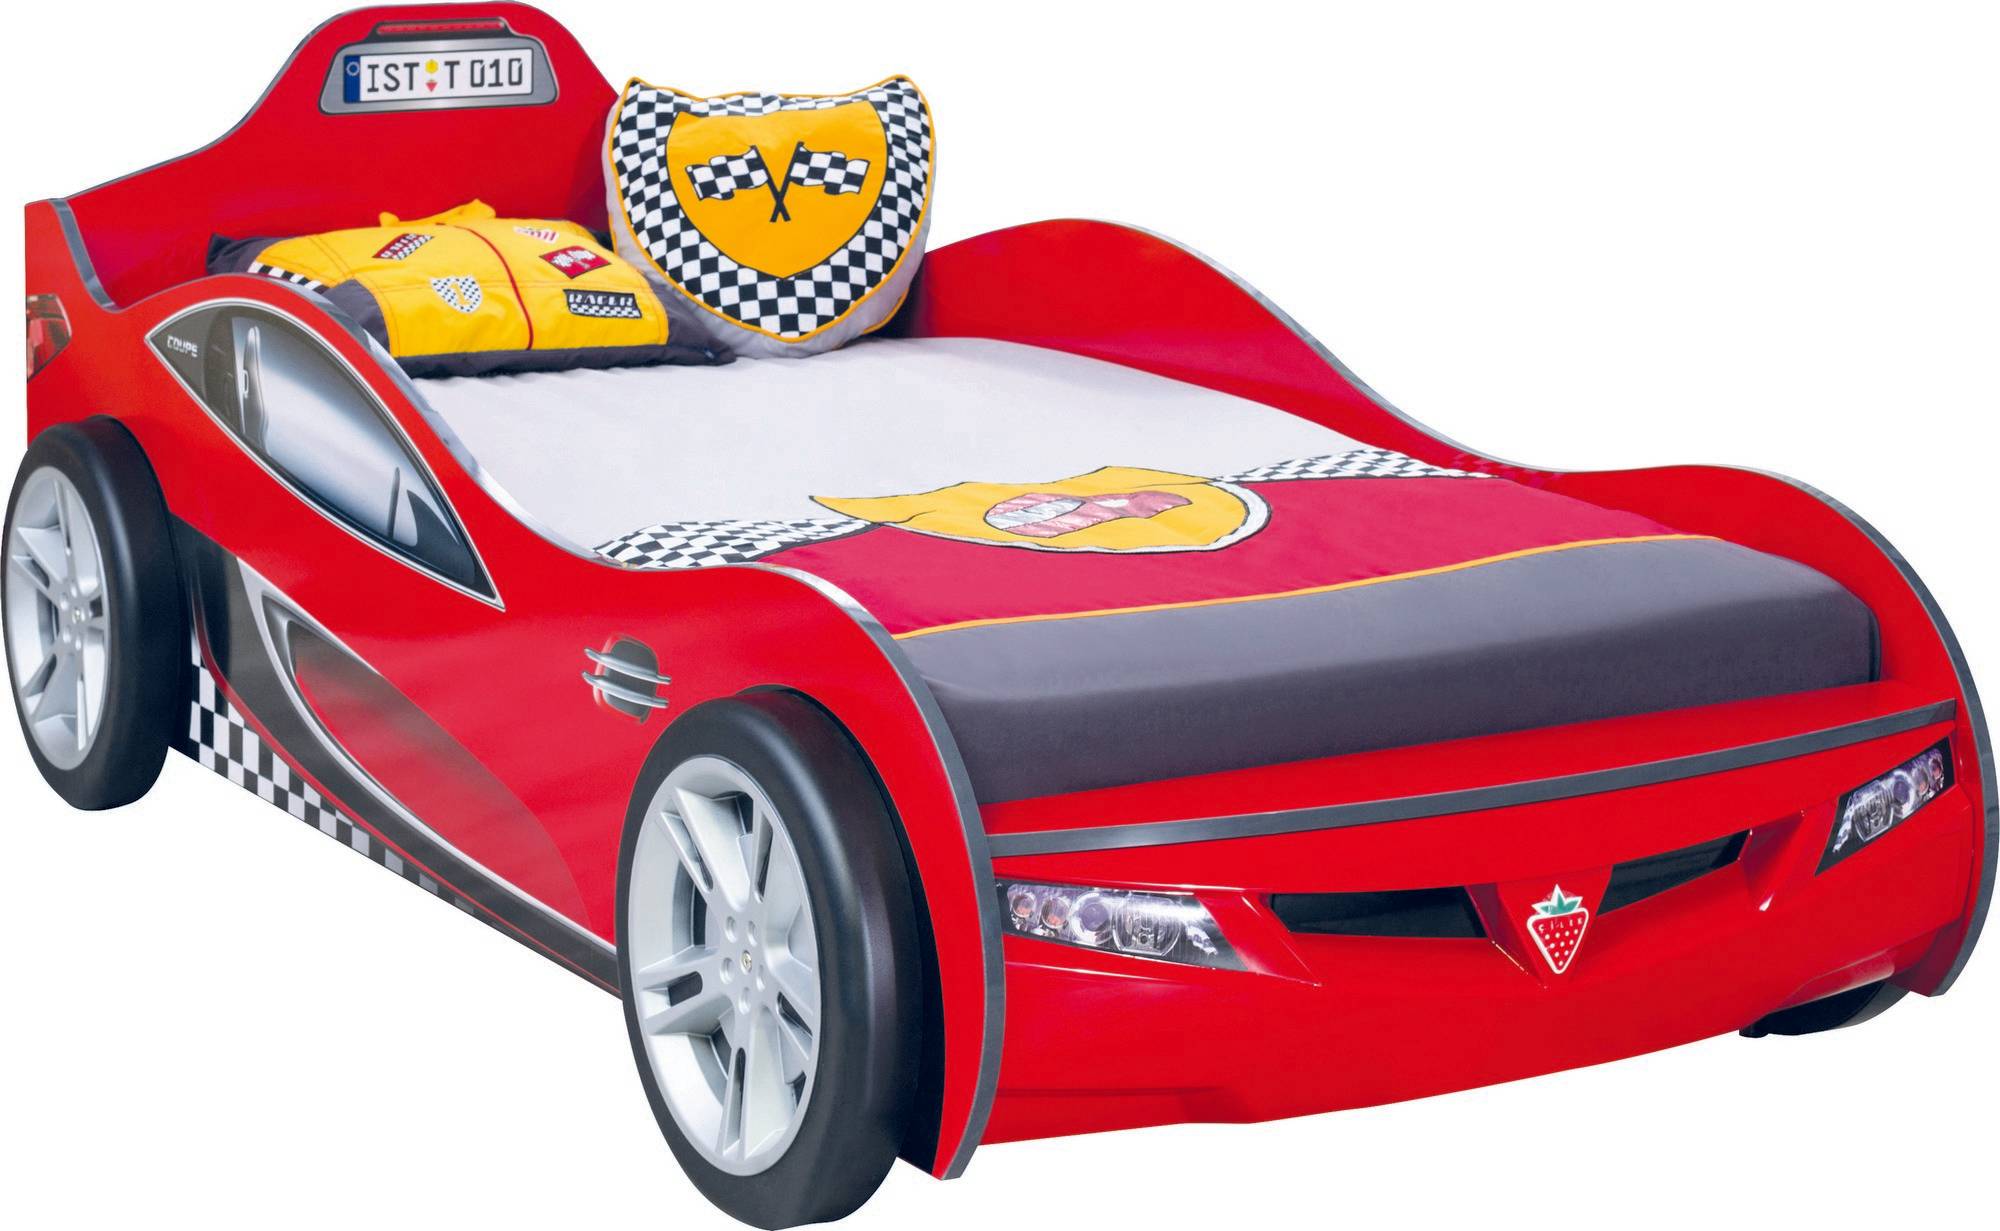 Cama de coche deportivo Gullwing 80x190cm Madera Roja